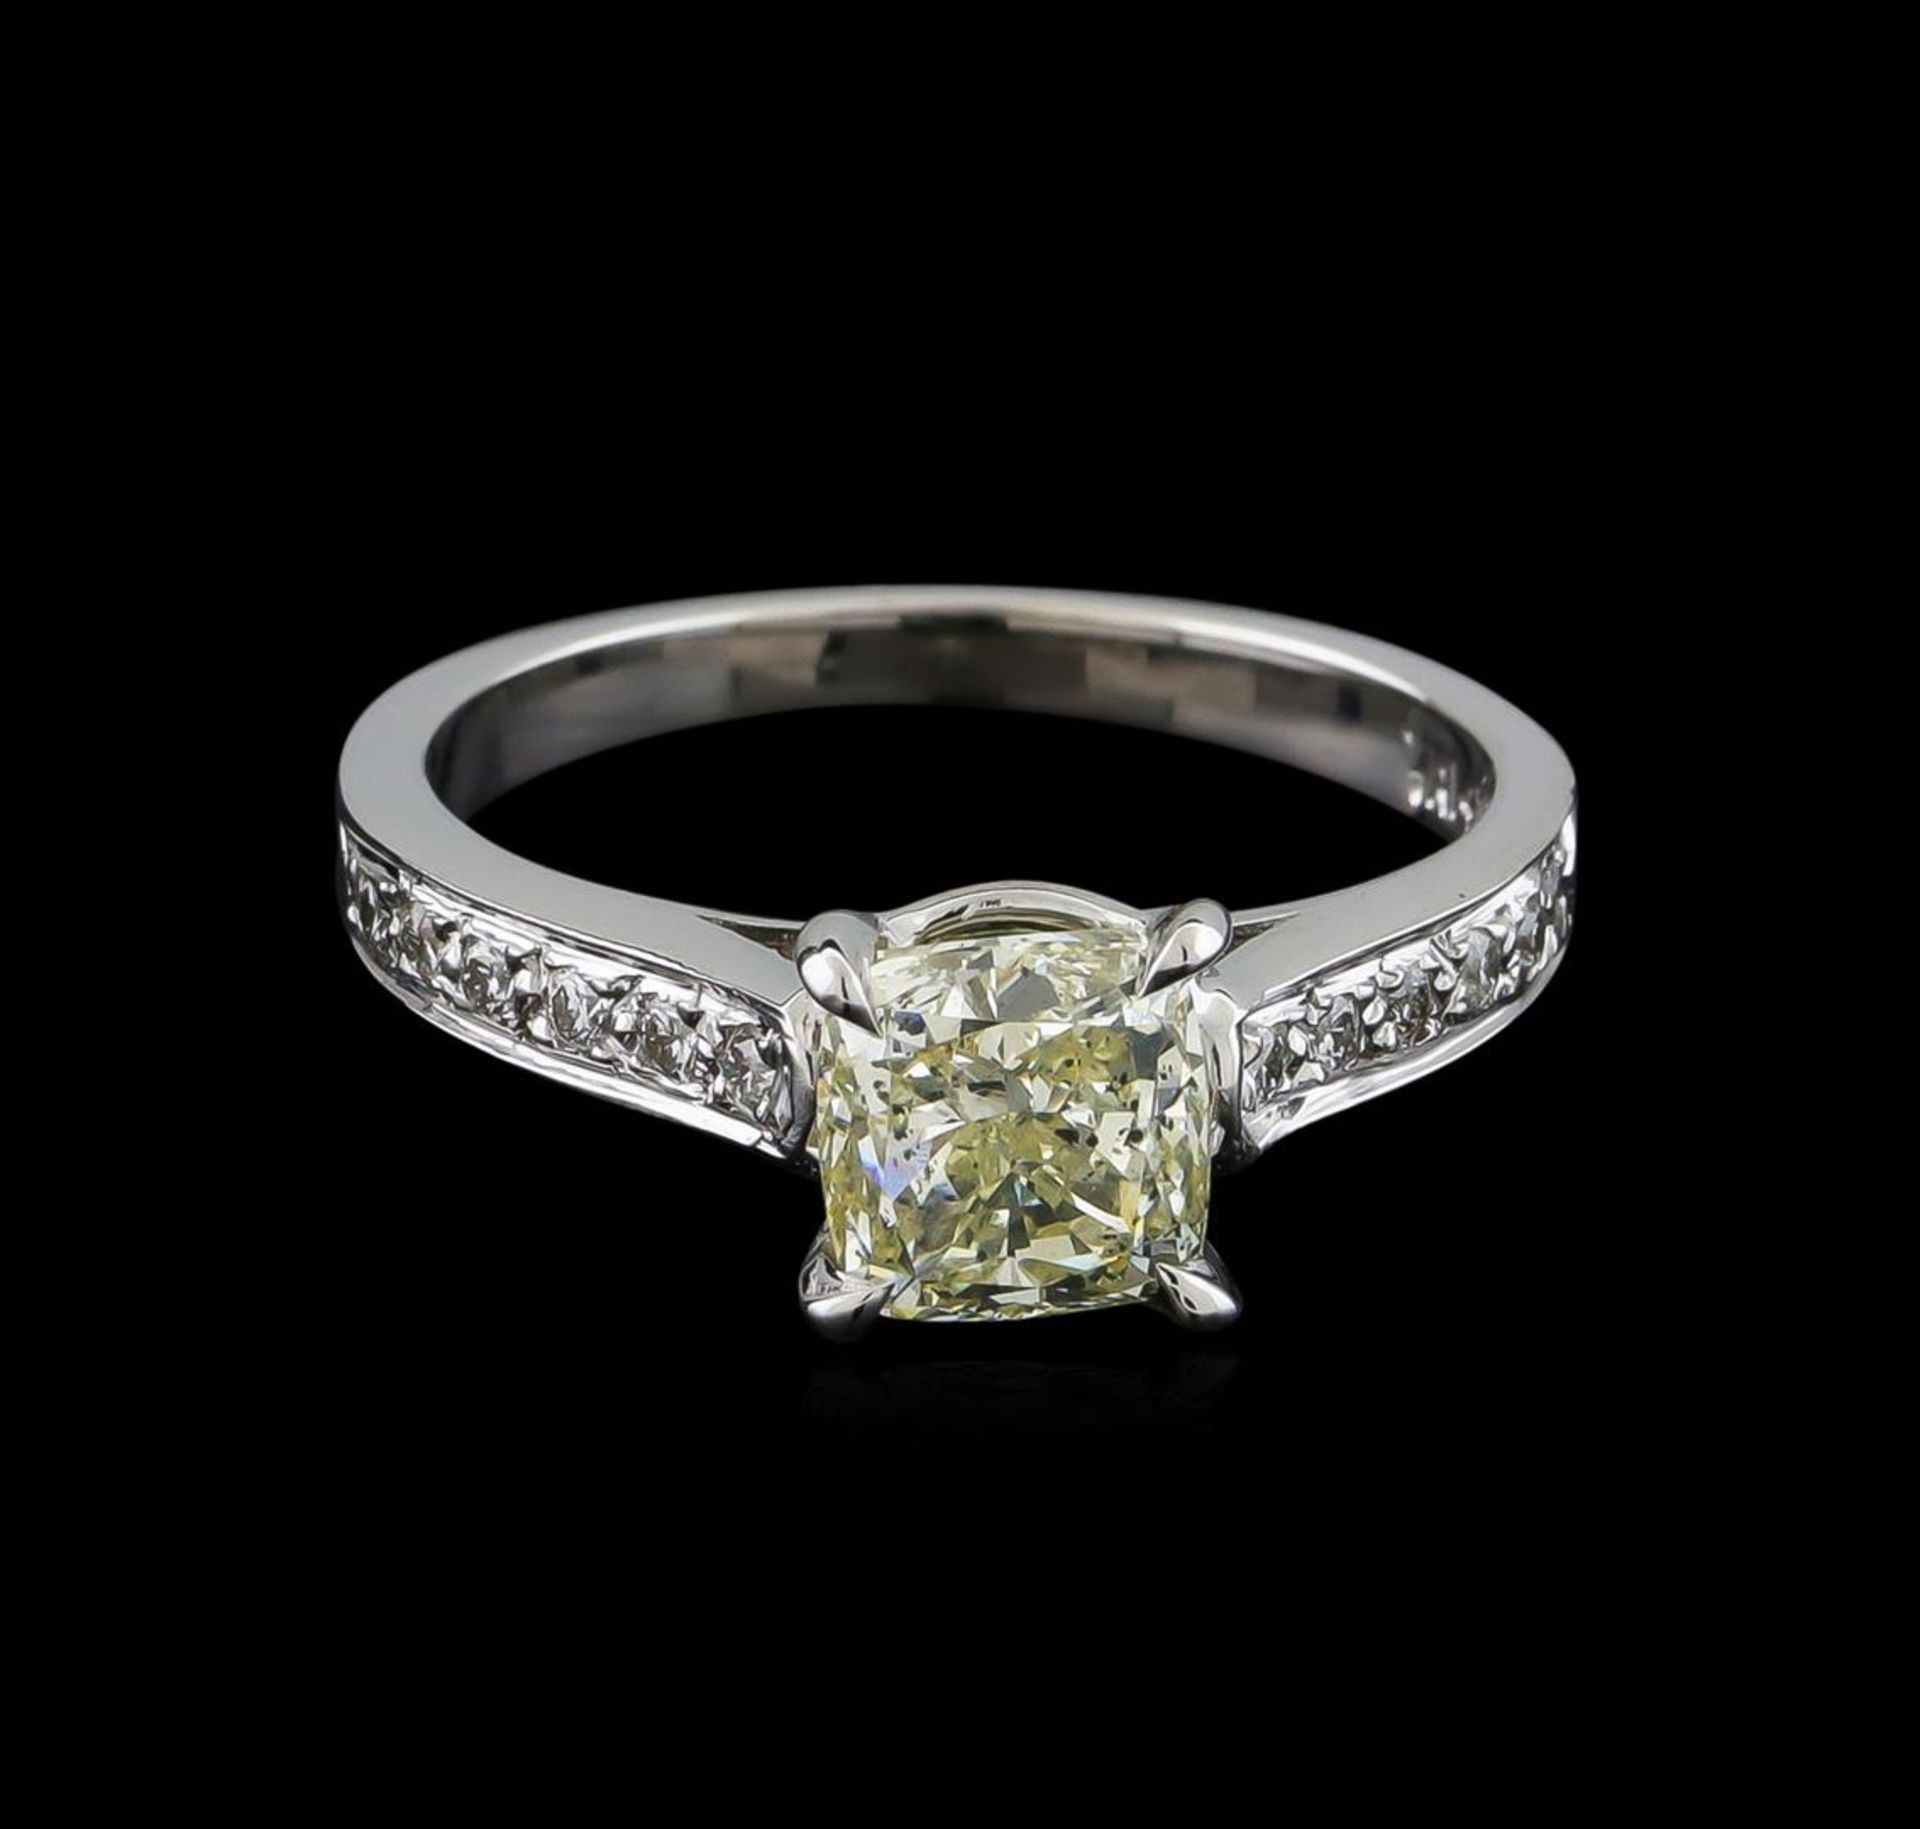 1.77 ctw Diamond Ring - 14KT White Gold - Image 2 of 5